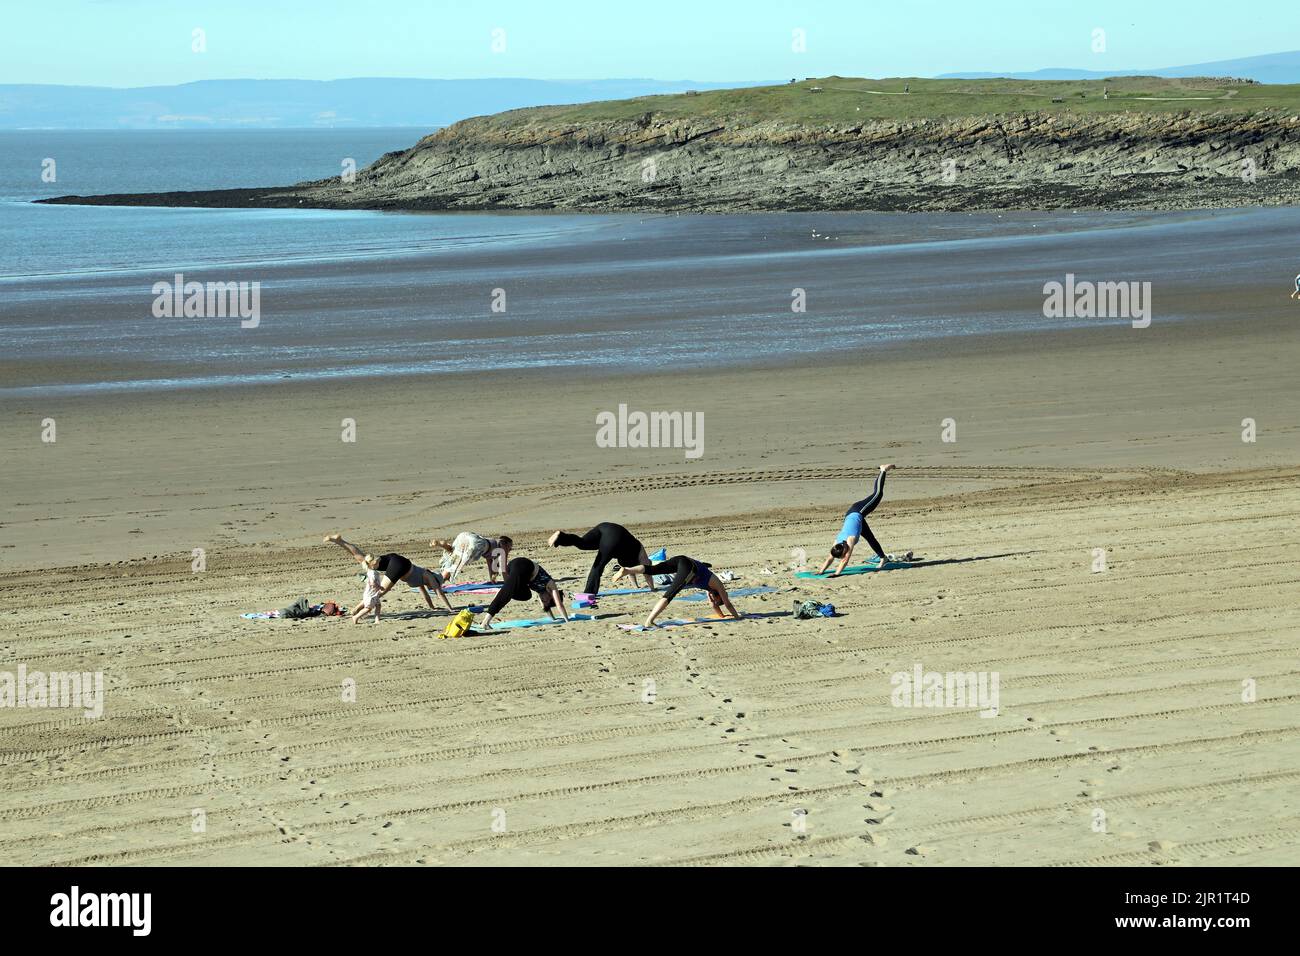 Exercising on the beach. Stock Photo